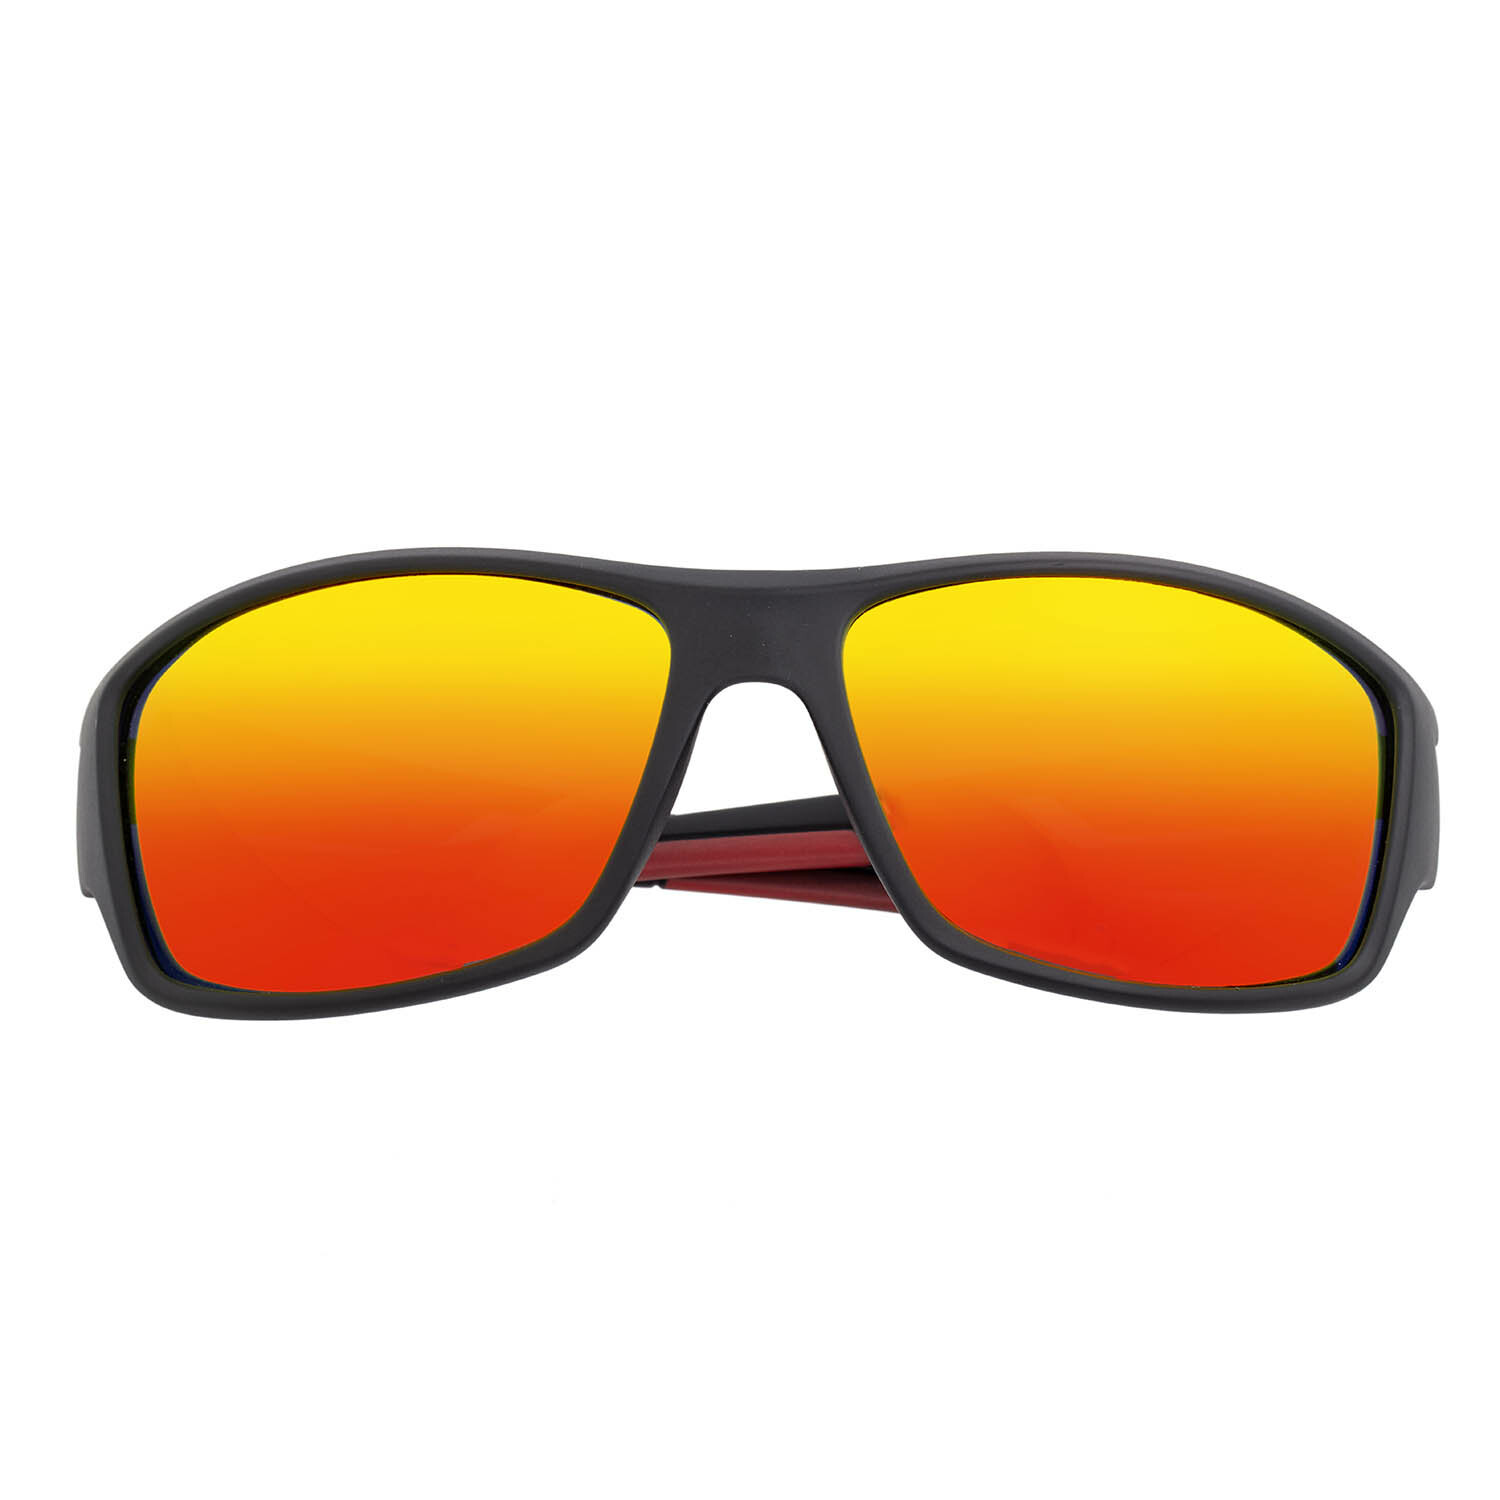 Aquarius Polarized Sunglasses // Black Frame + Red-Yellow Lens - Breed ...